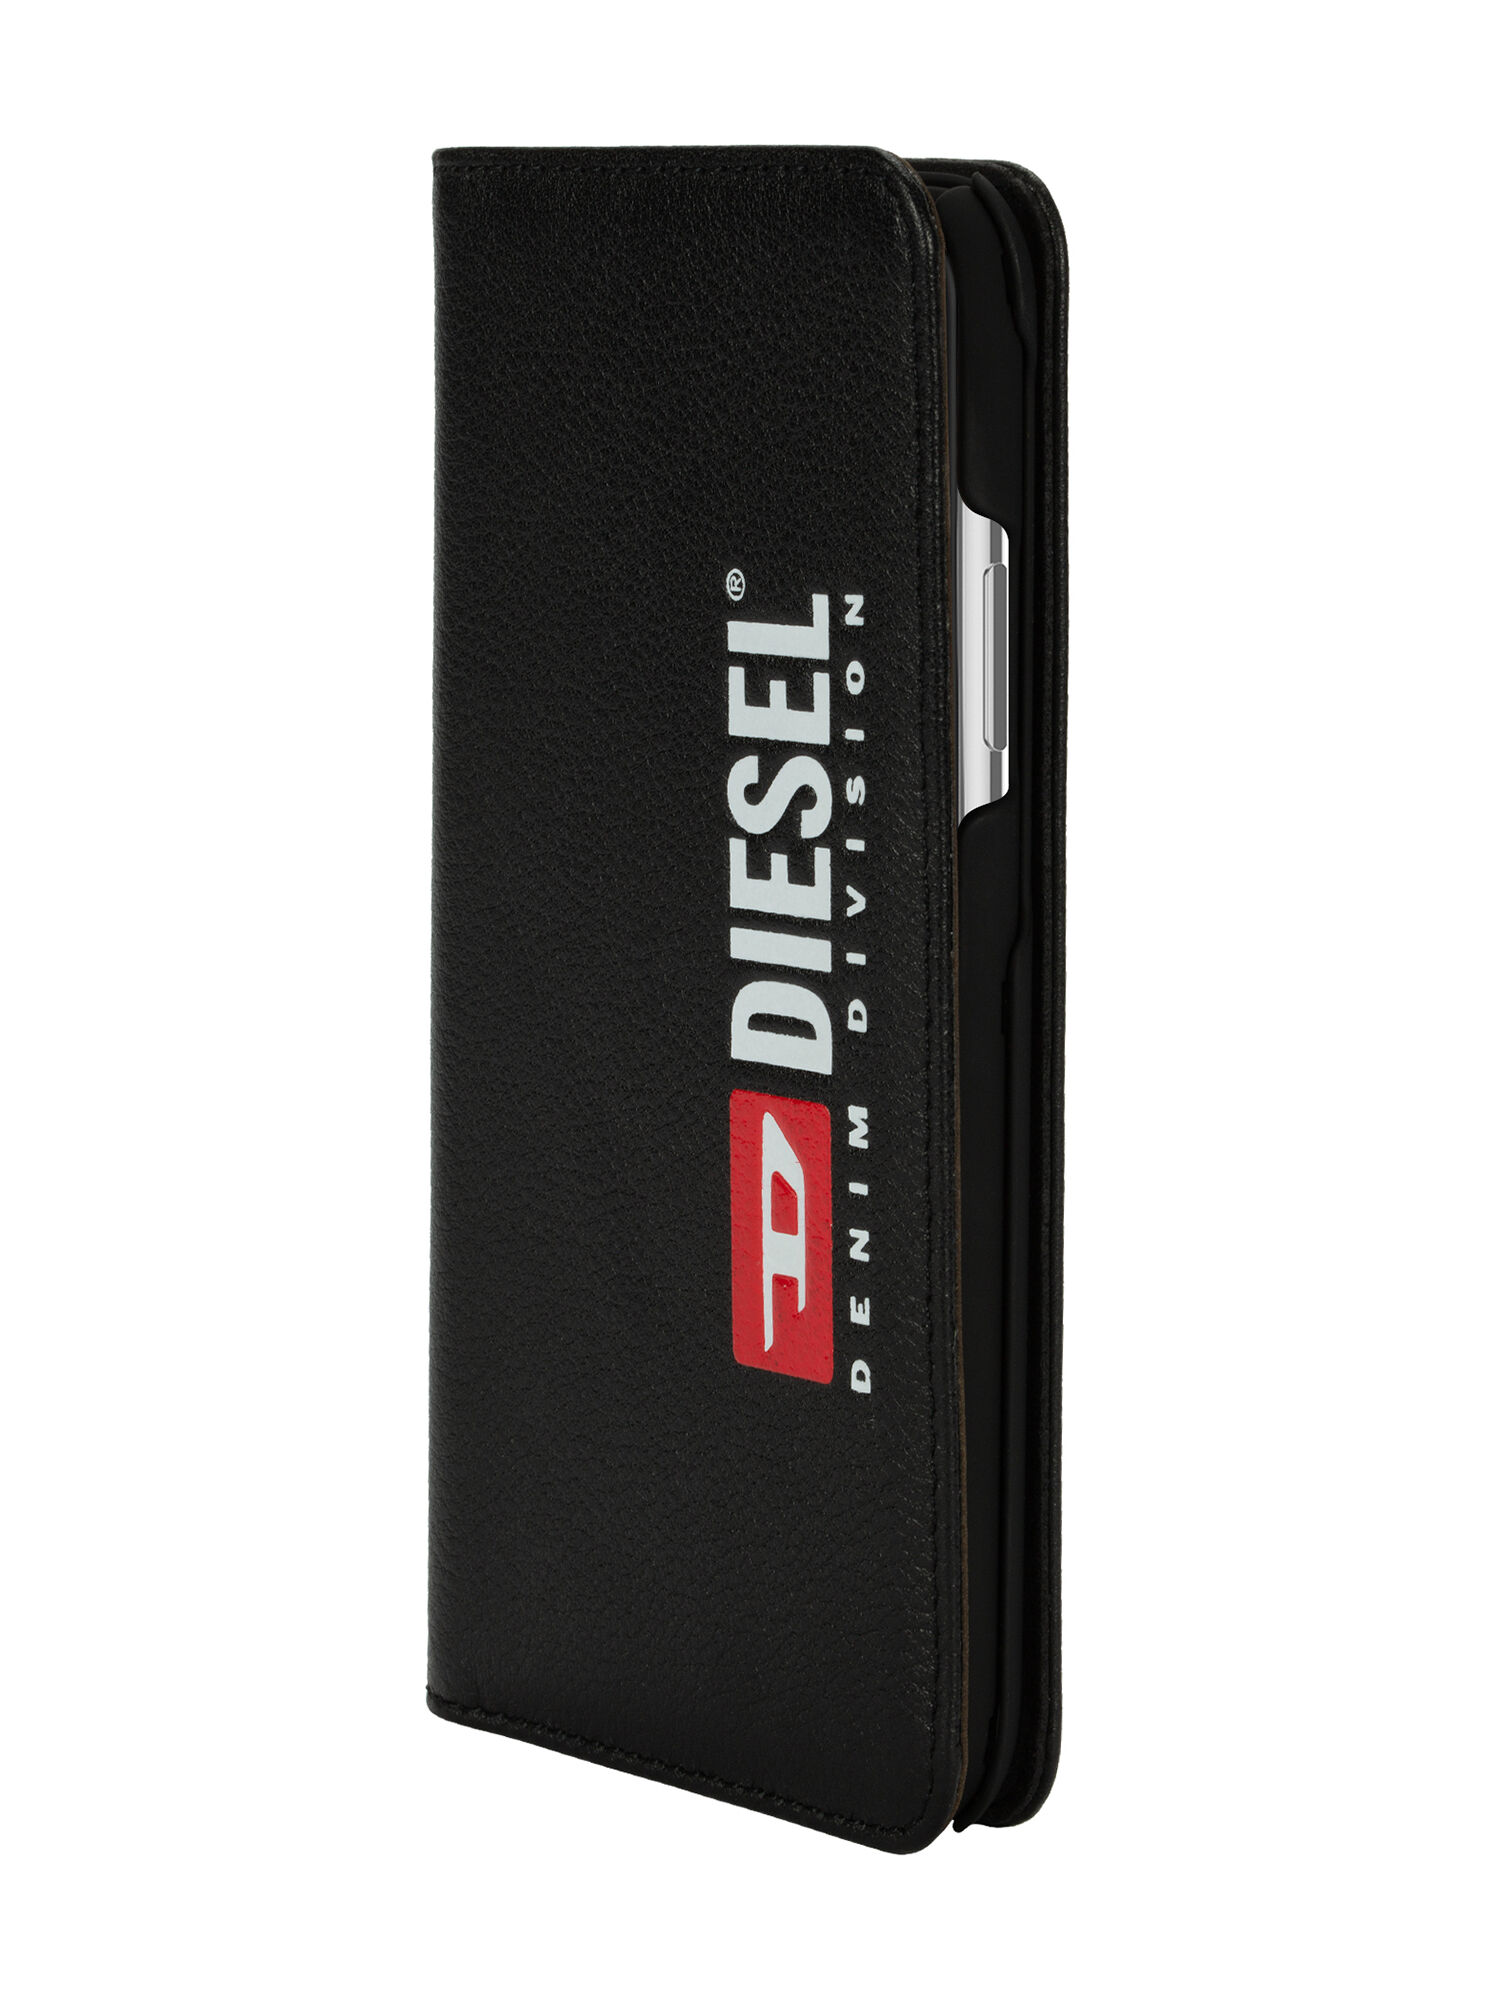 Diesel - DIESEL 2-IN-1 FOLIO CASE FOR IPHONE XS MAX,  - Image 3